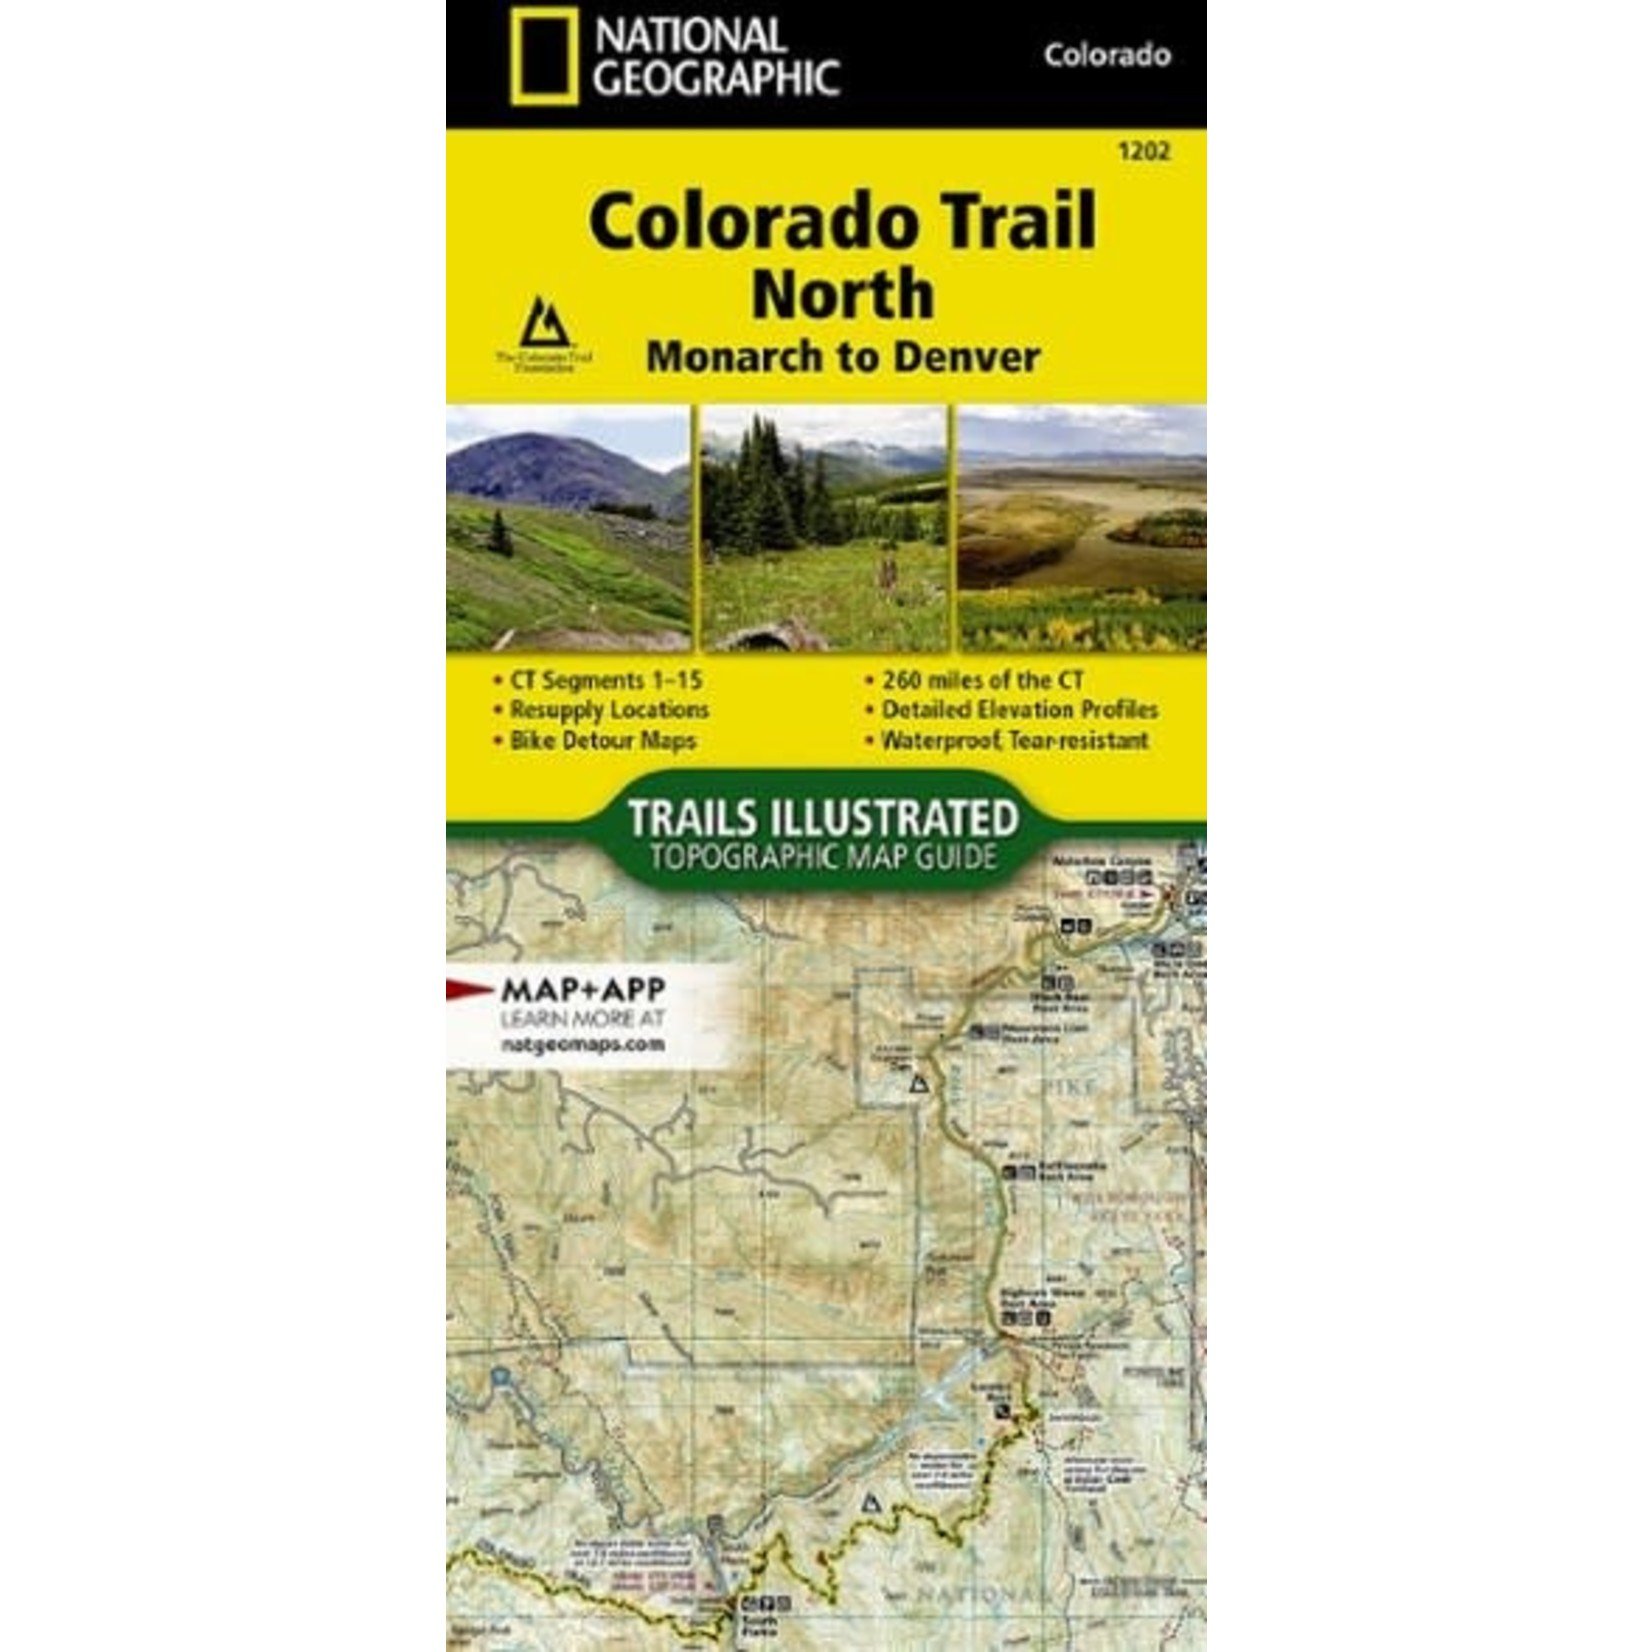 colorado-trail-north-1202-san-juan-mountains-association-online-store